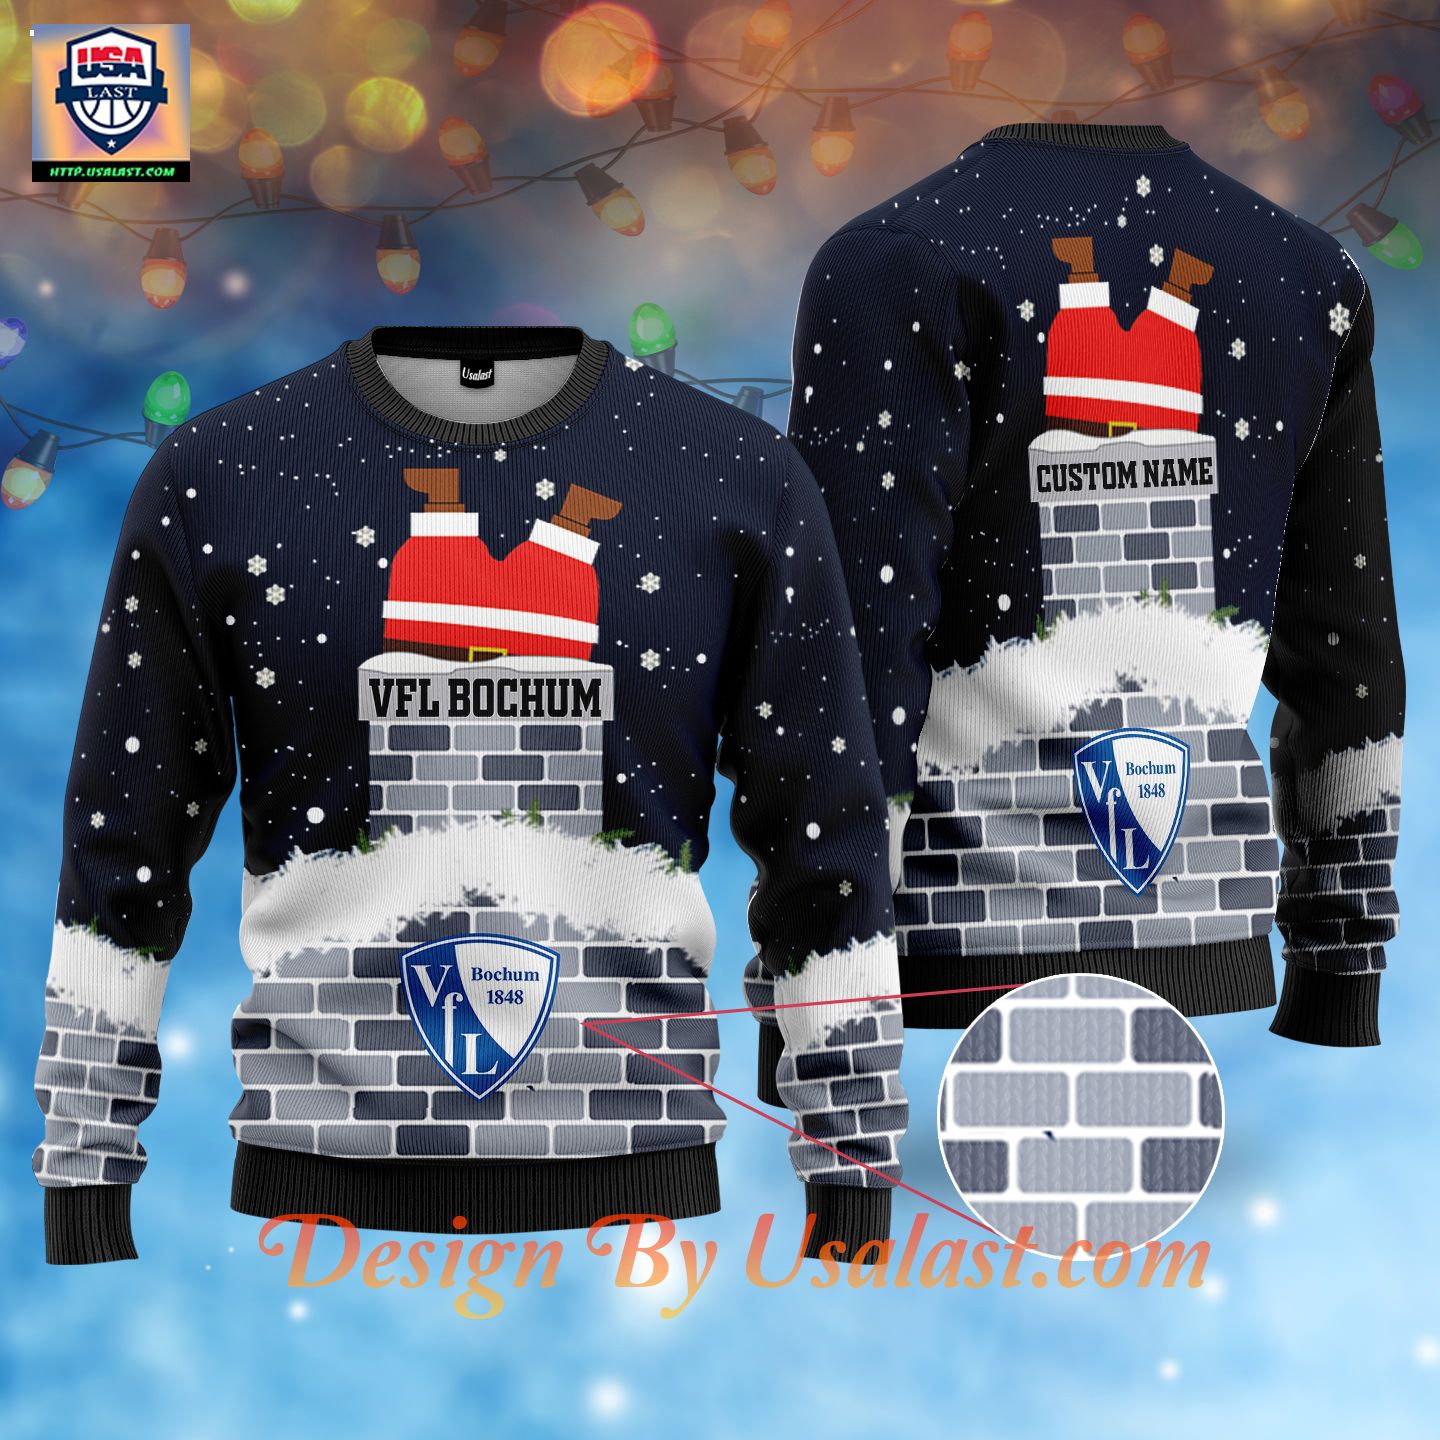 Available VfL Bochum Custom Name Ugly Christmas Sweater – Navy Version